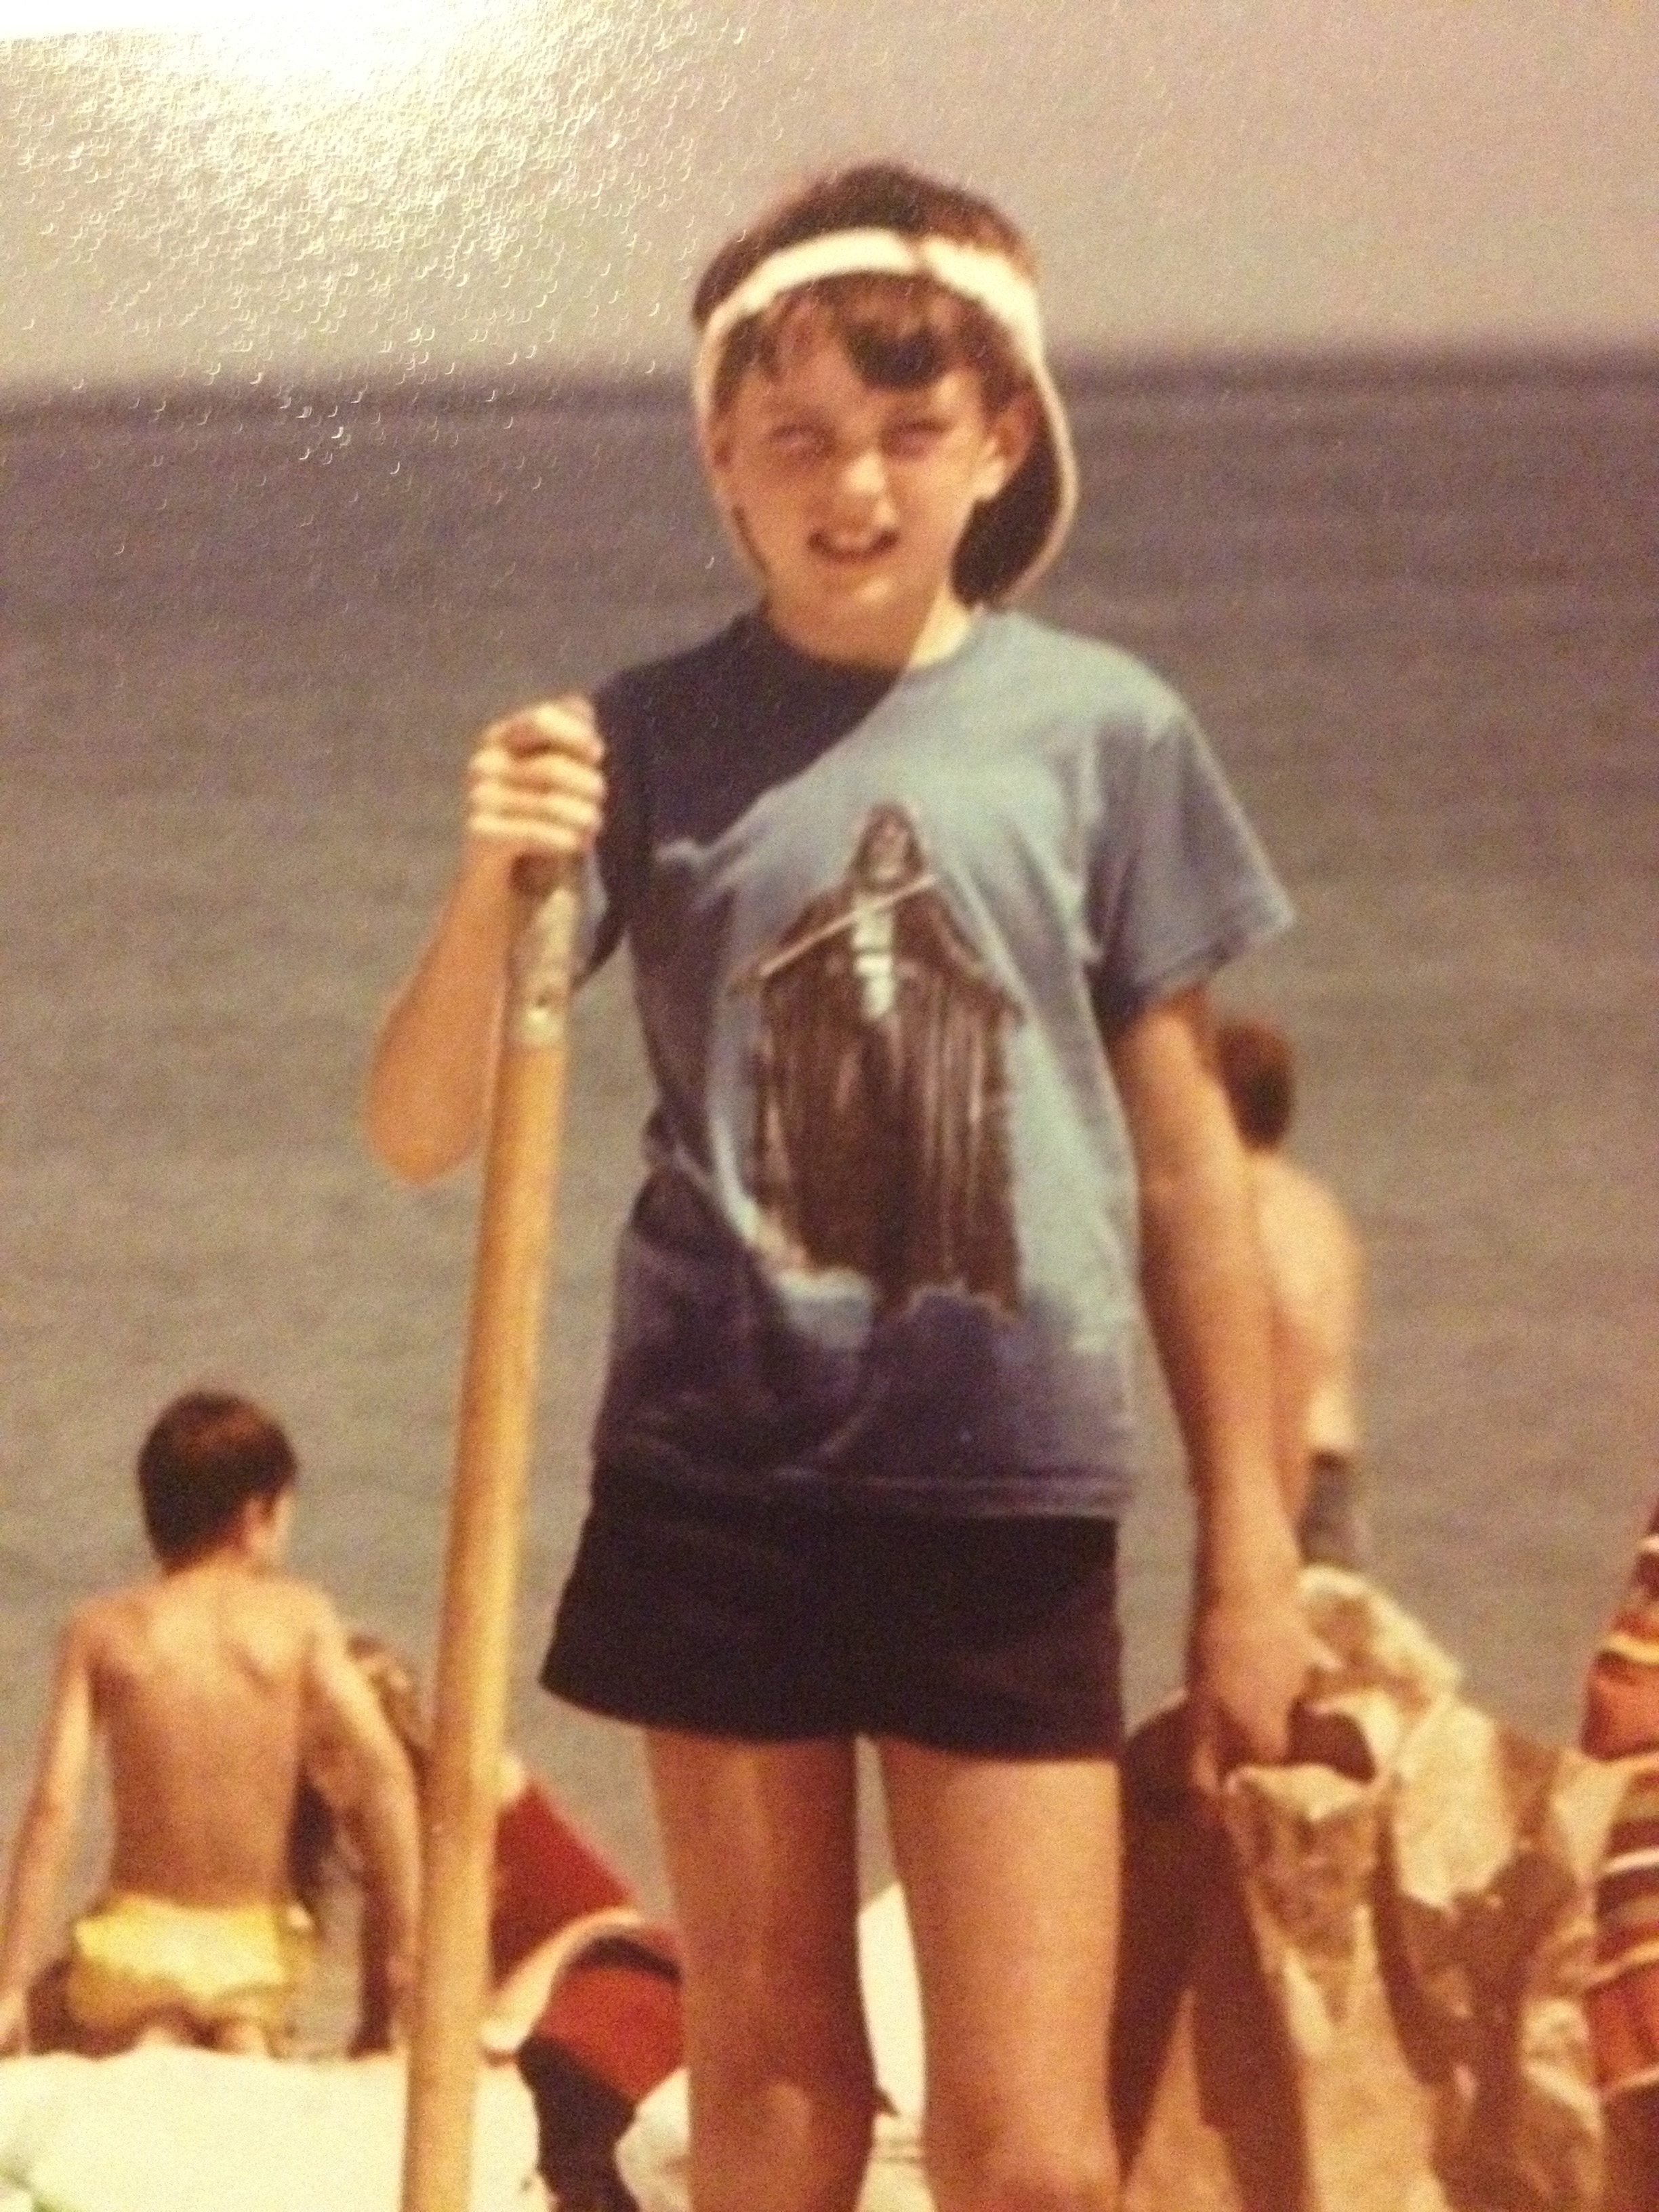 Jonathan at aged 10 sporting his favourite Star Wars paraphernalia.